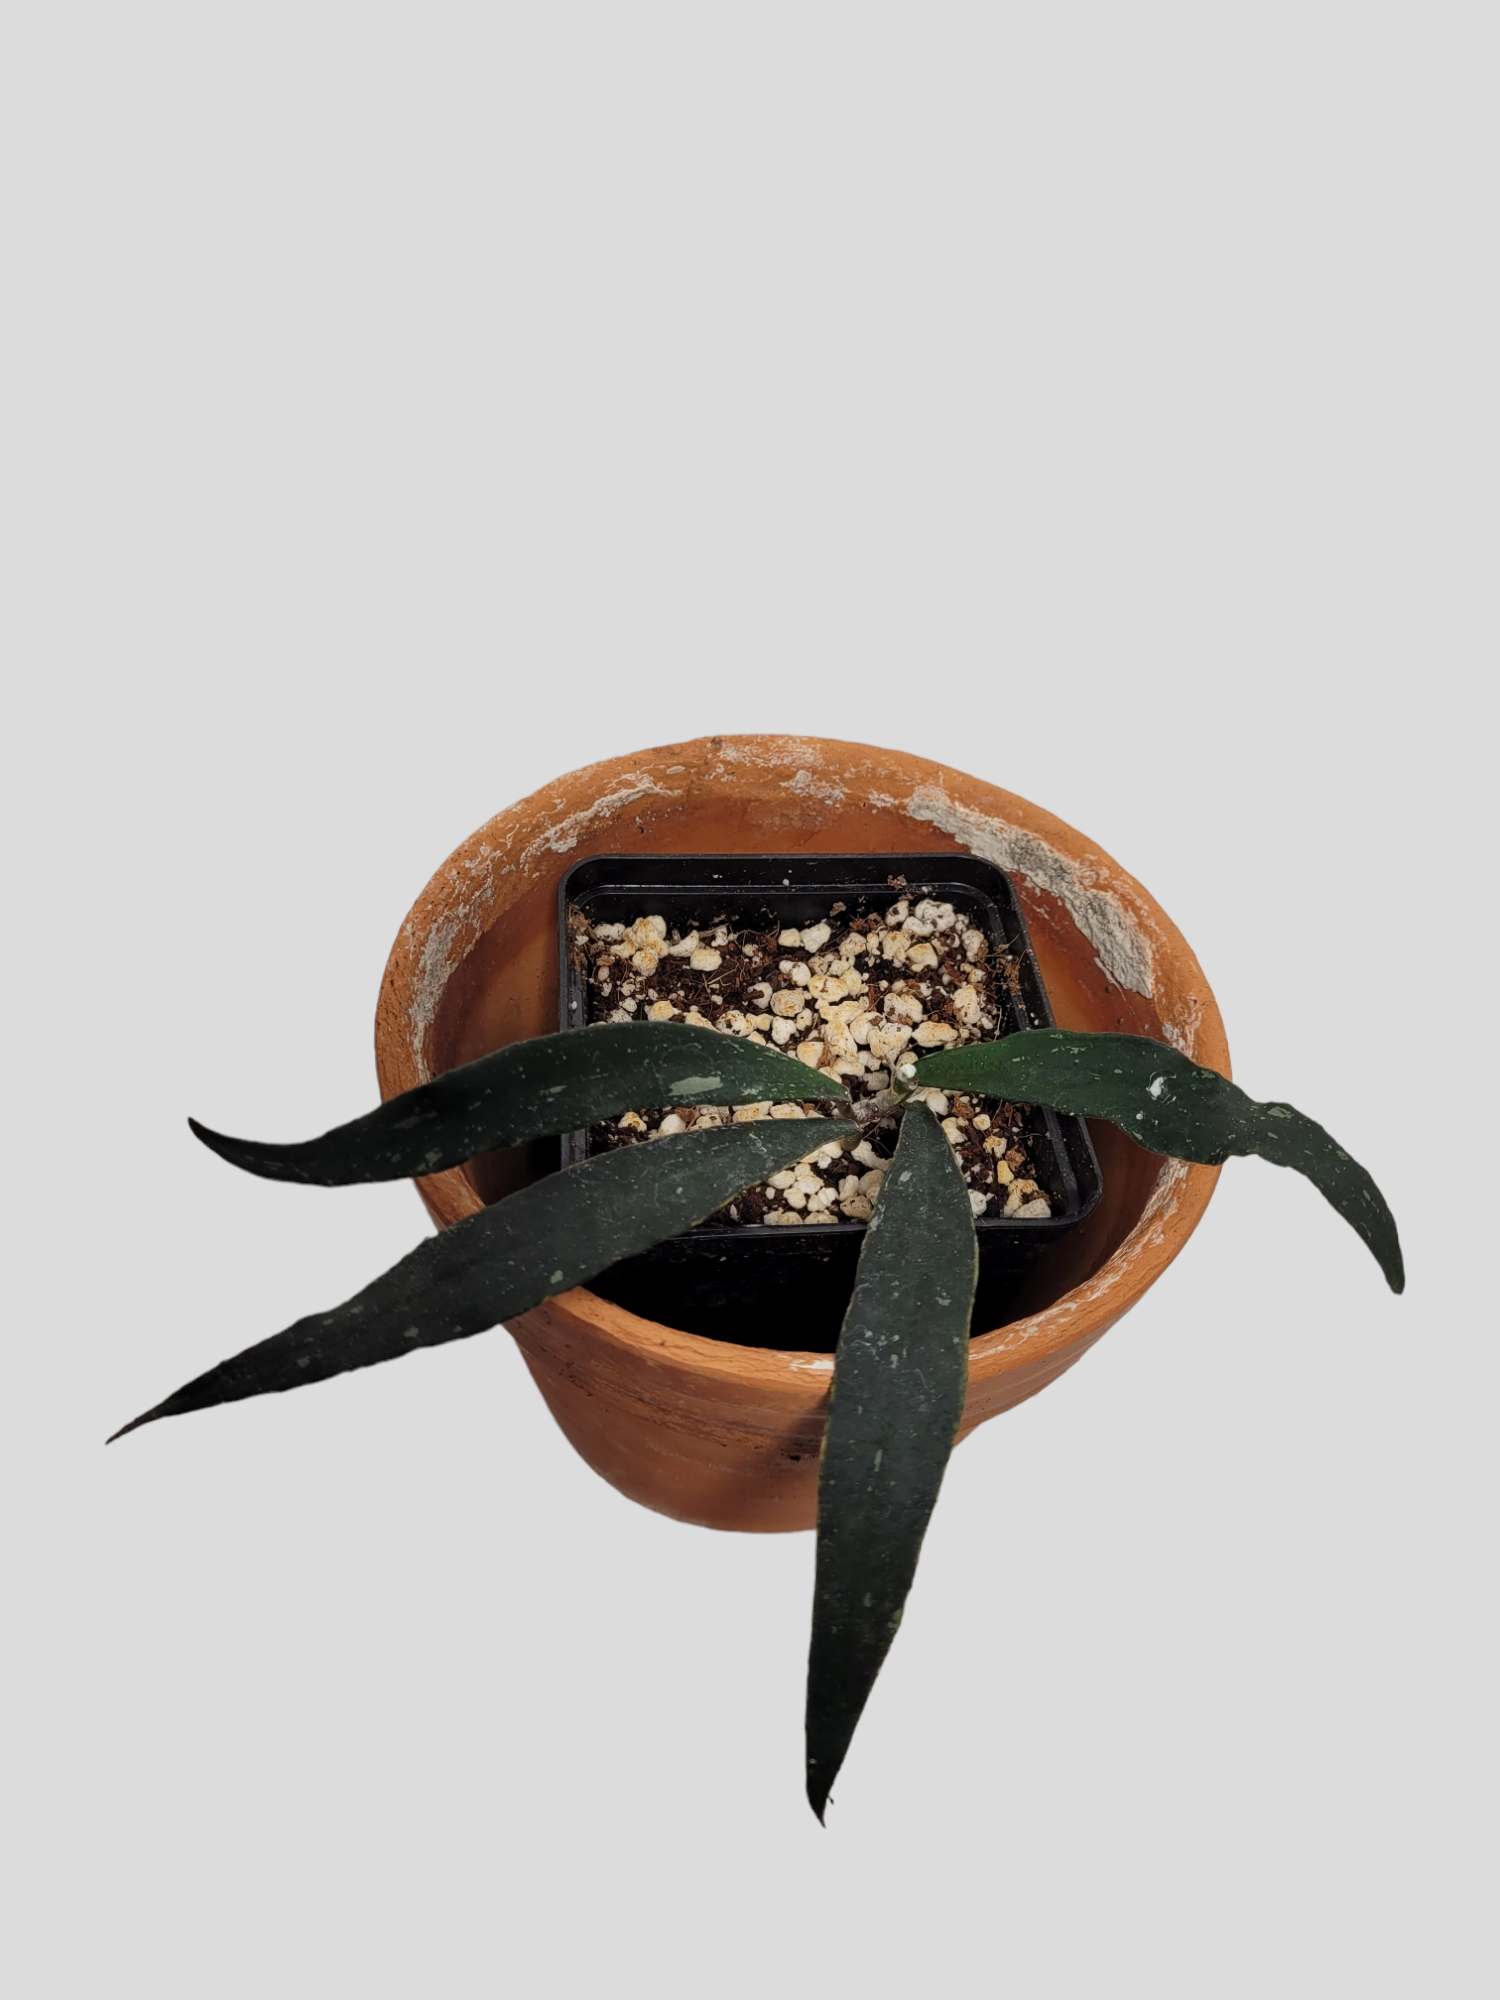 Hoya mirabilis